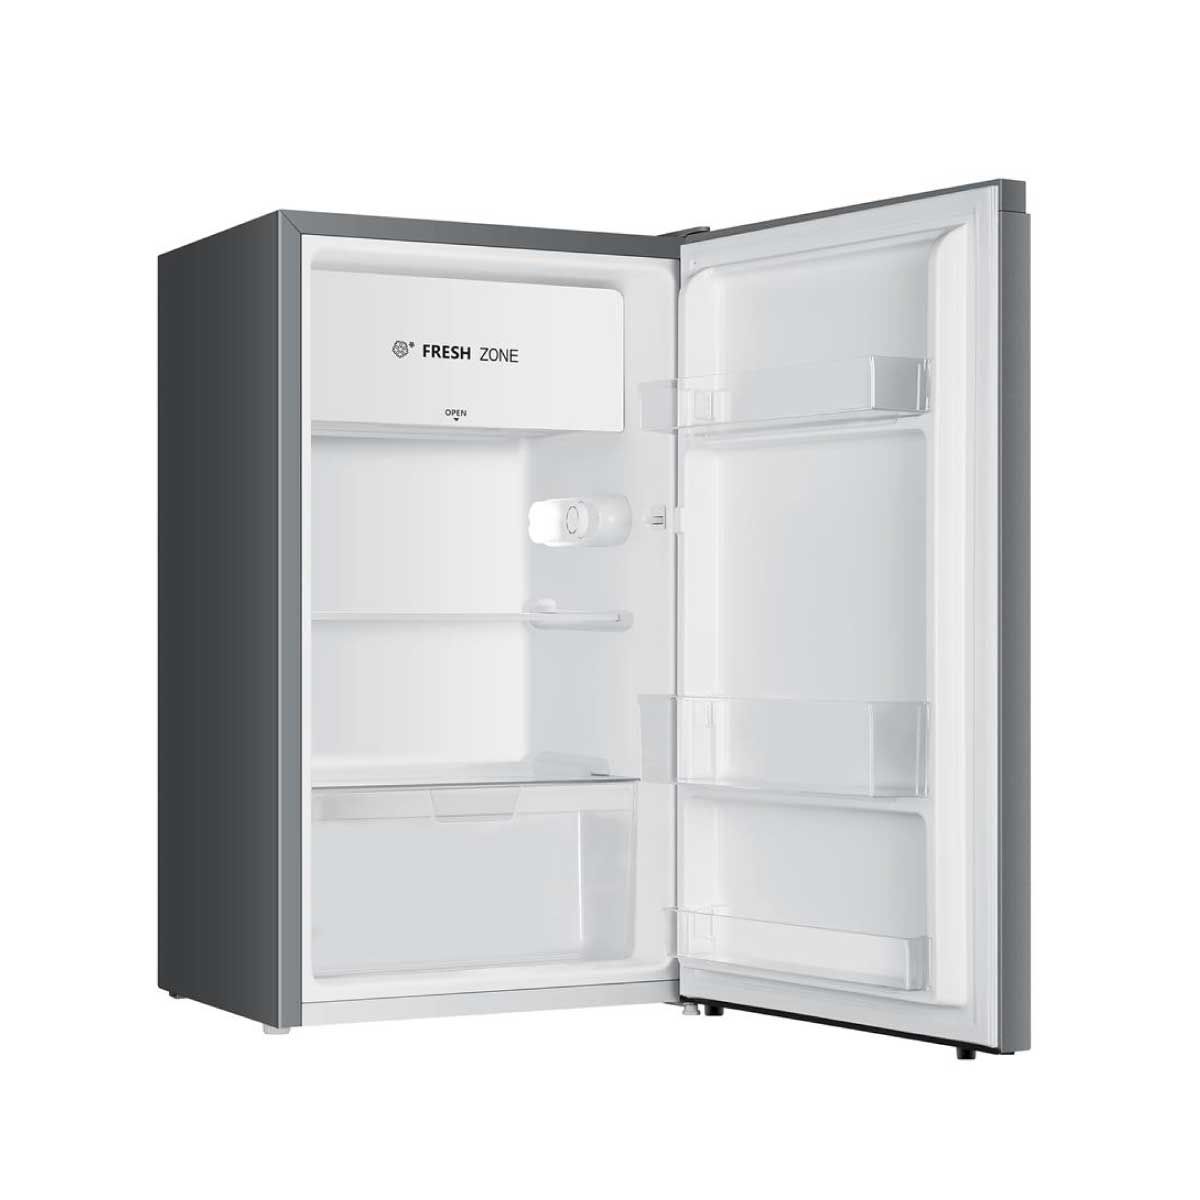 HISENSE ตู้เย็น MINIBAR 3.4Q สีเงิน รุ่นRR121D4TGN